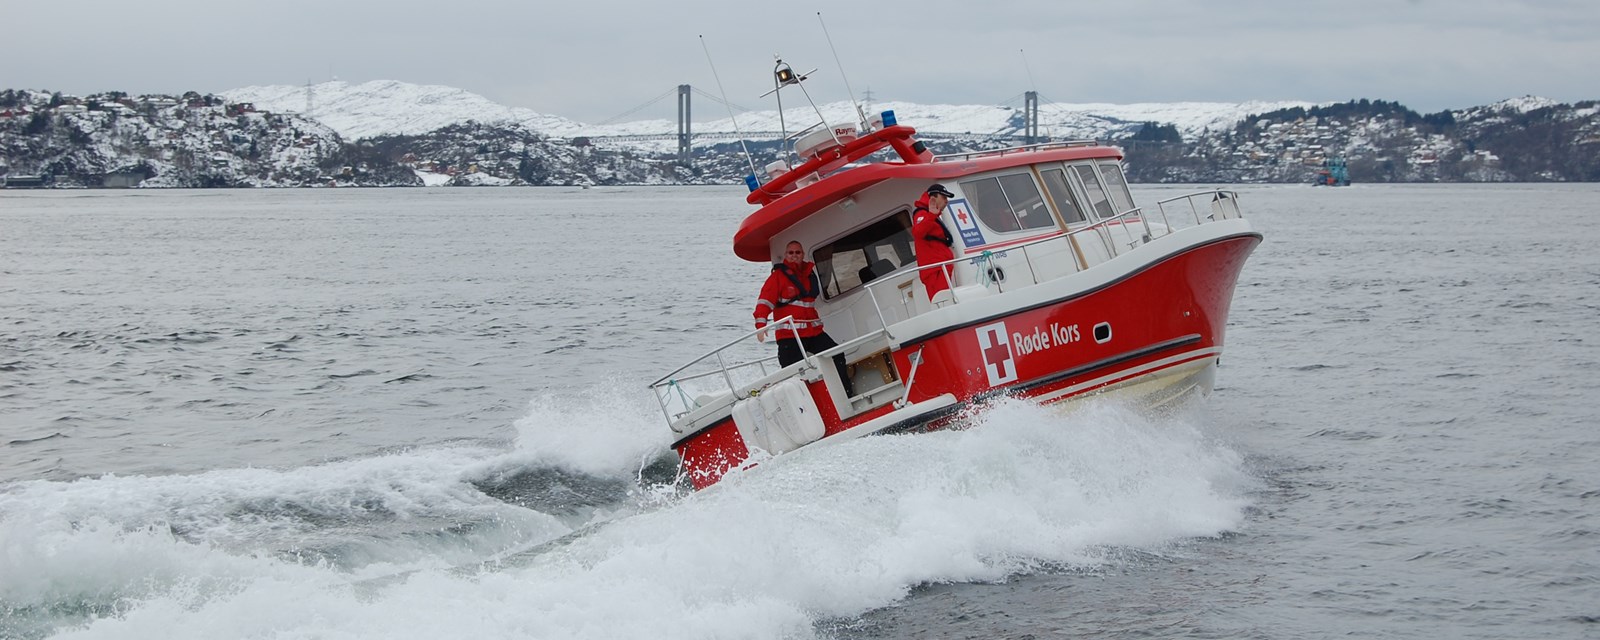 Røde Kors båten Hordaland